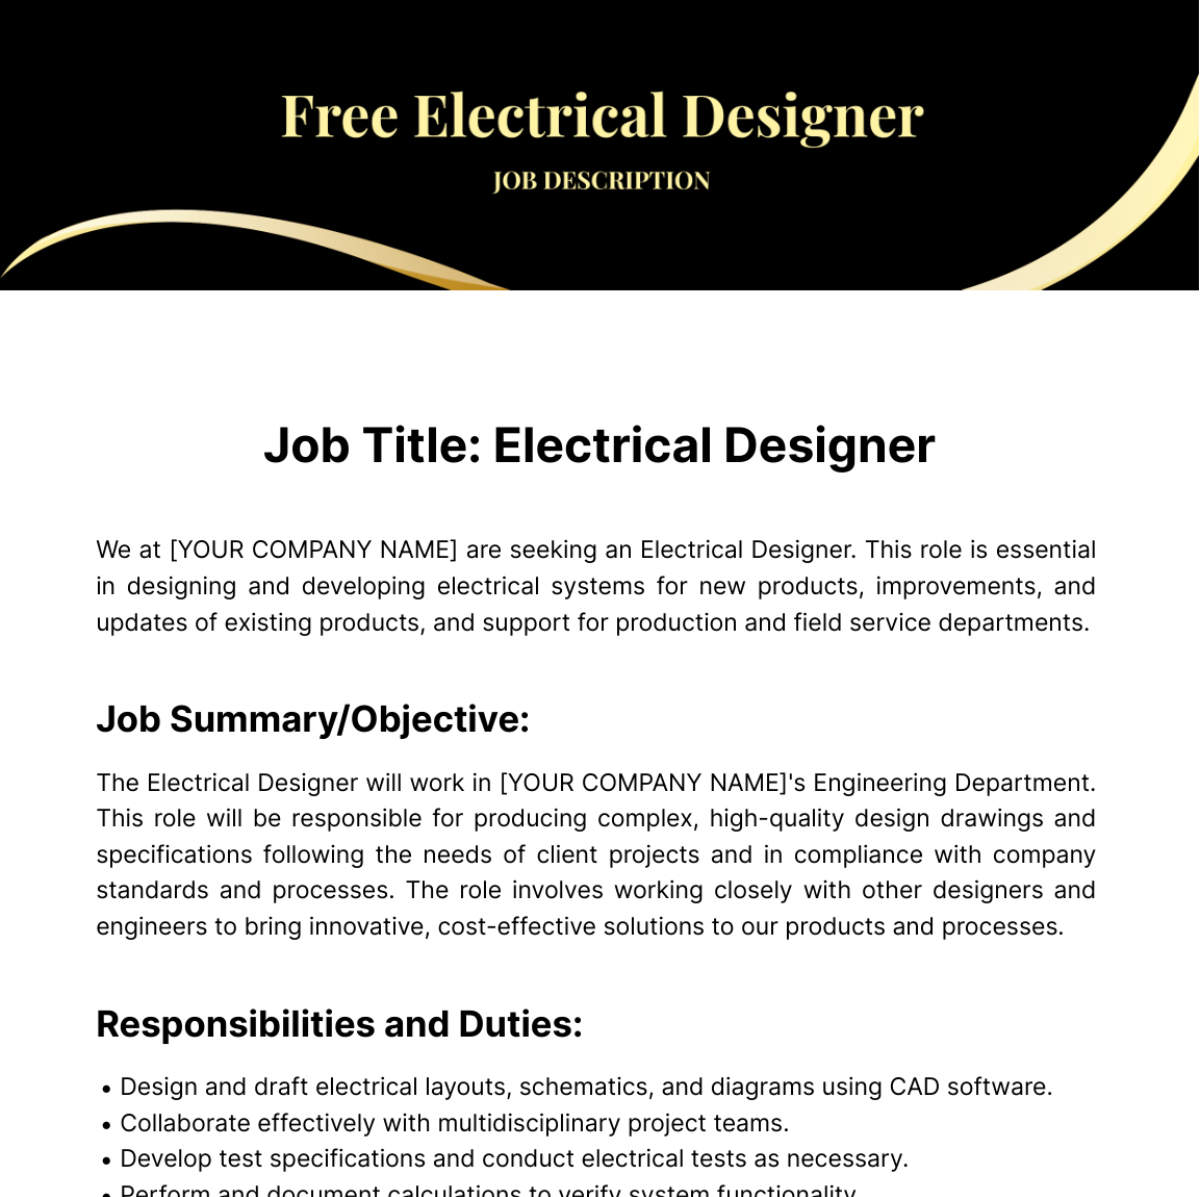 Free Electrical Designer Job Description Template